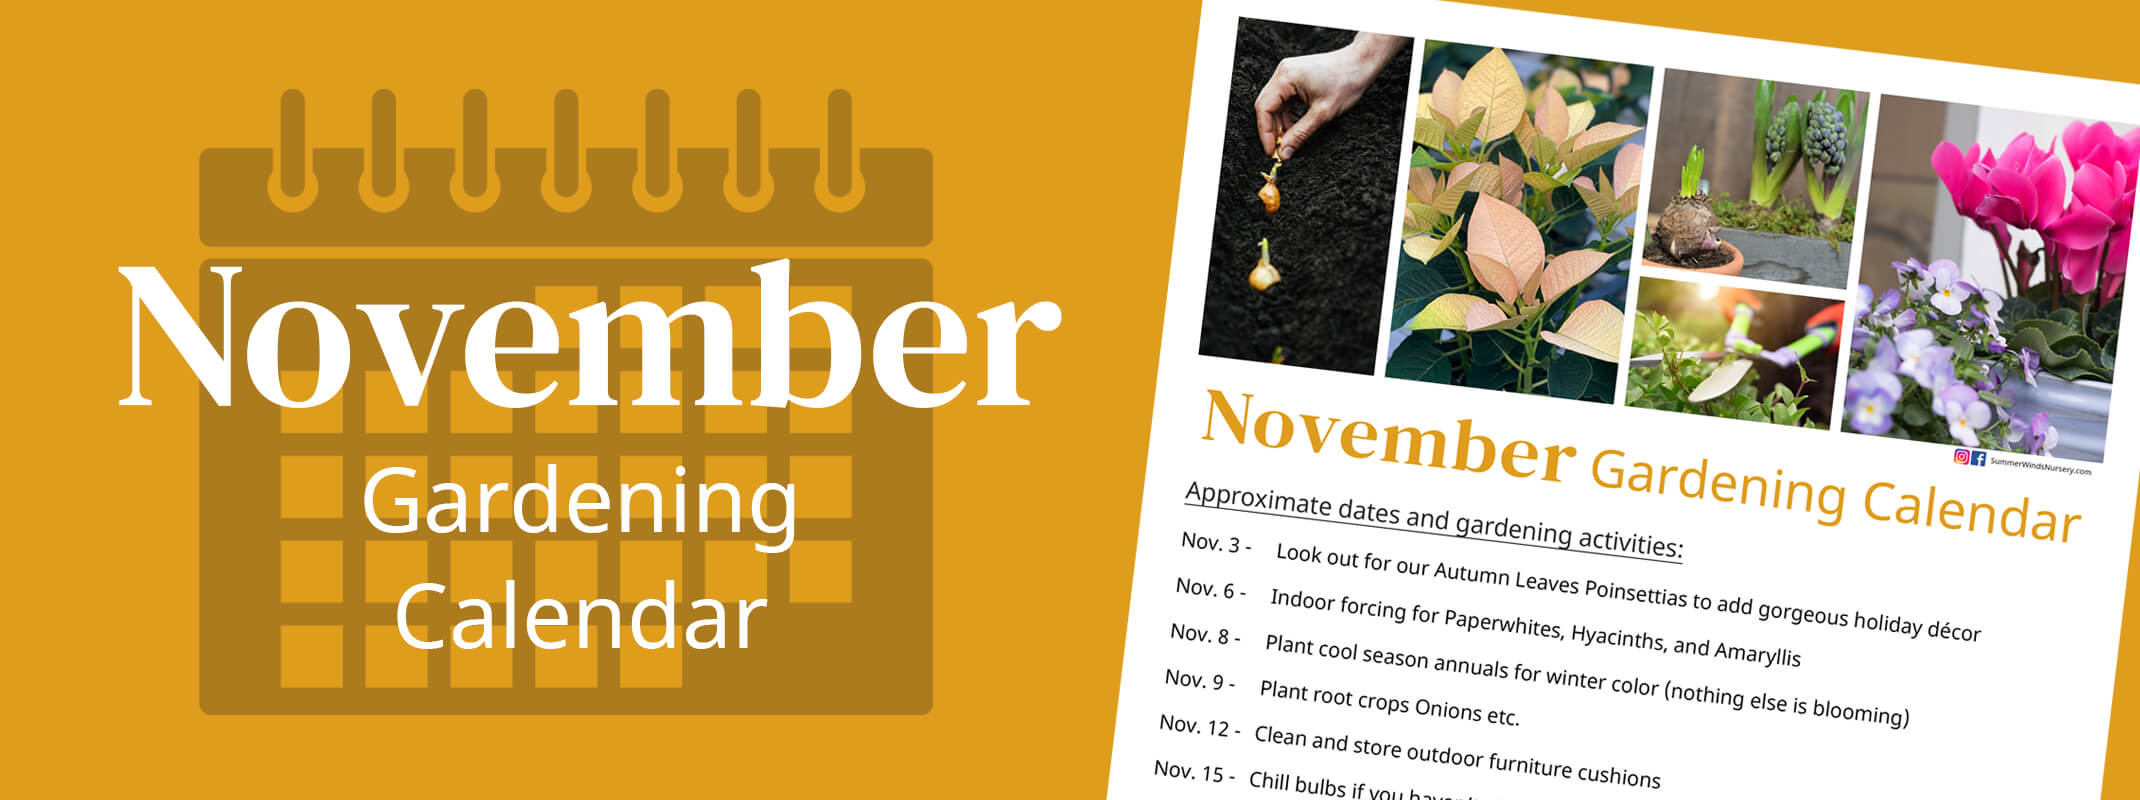 november gardening calendar with tips showing